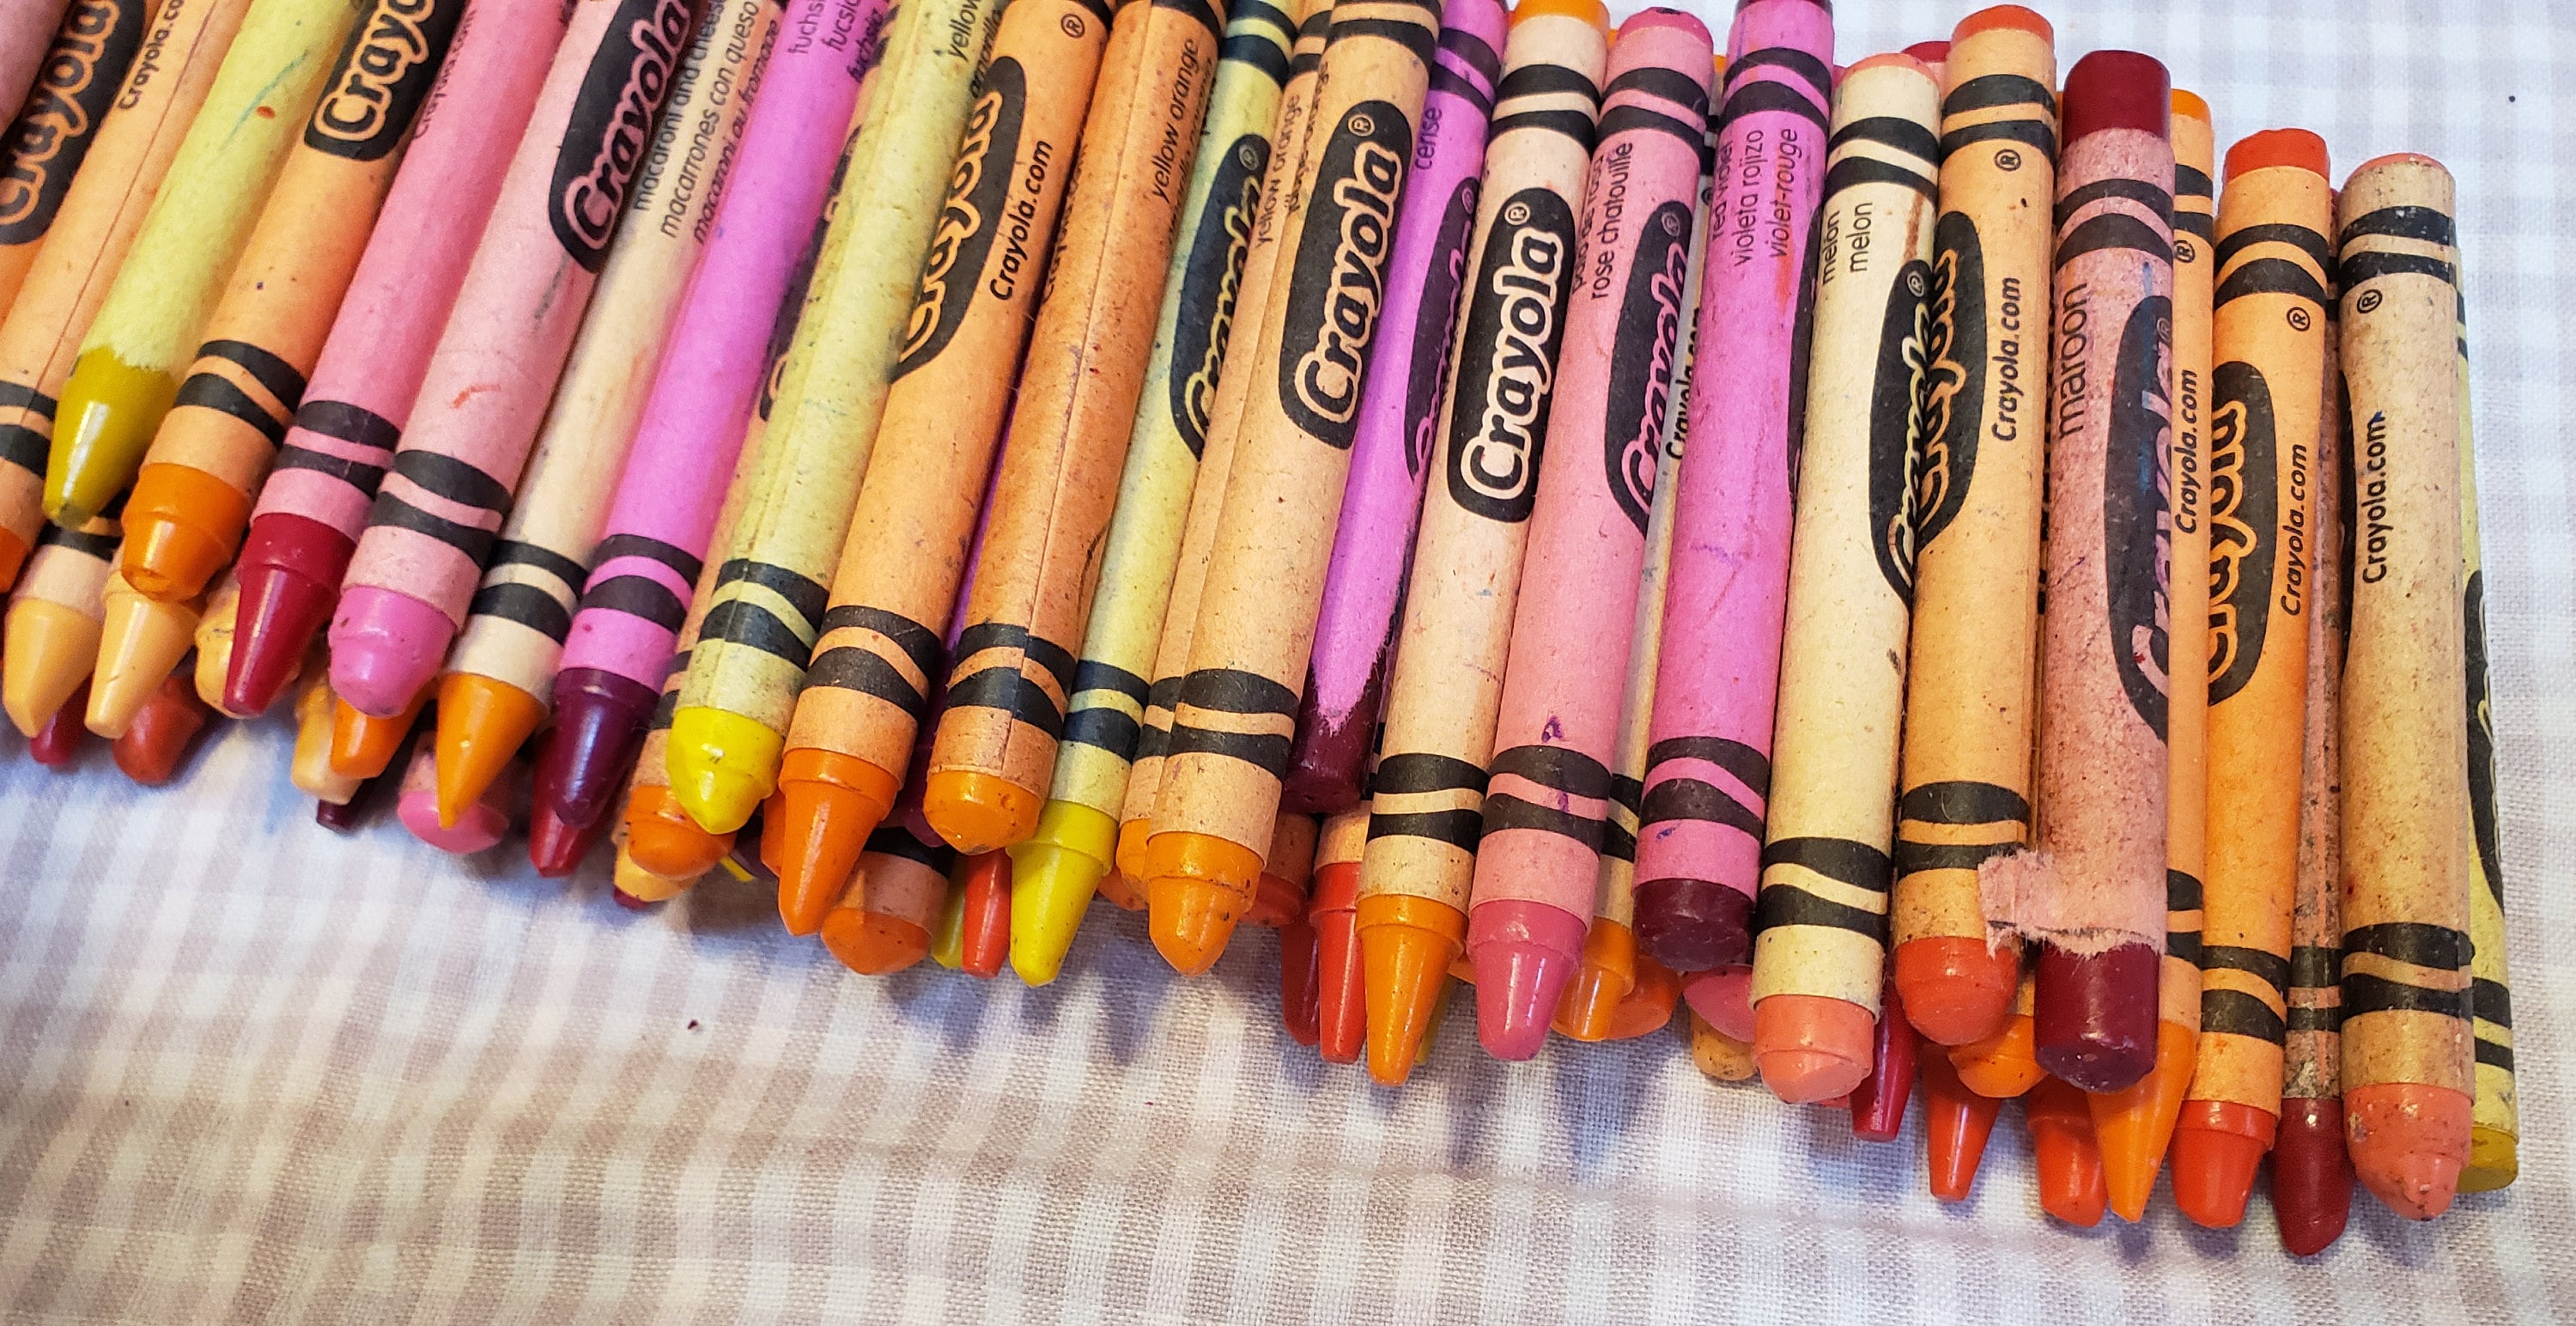 MinifigFans 50 Pink Crayons Bulk - Single Color Crayon Refill